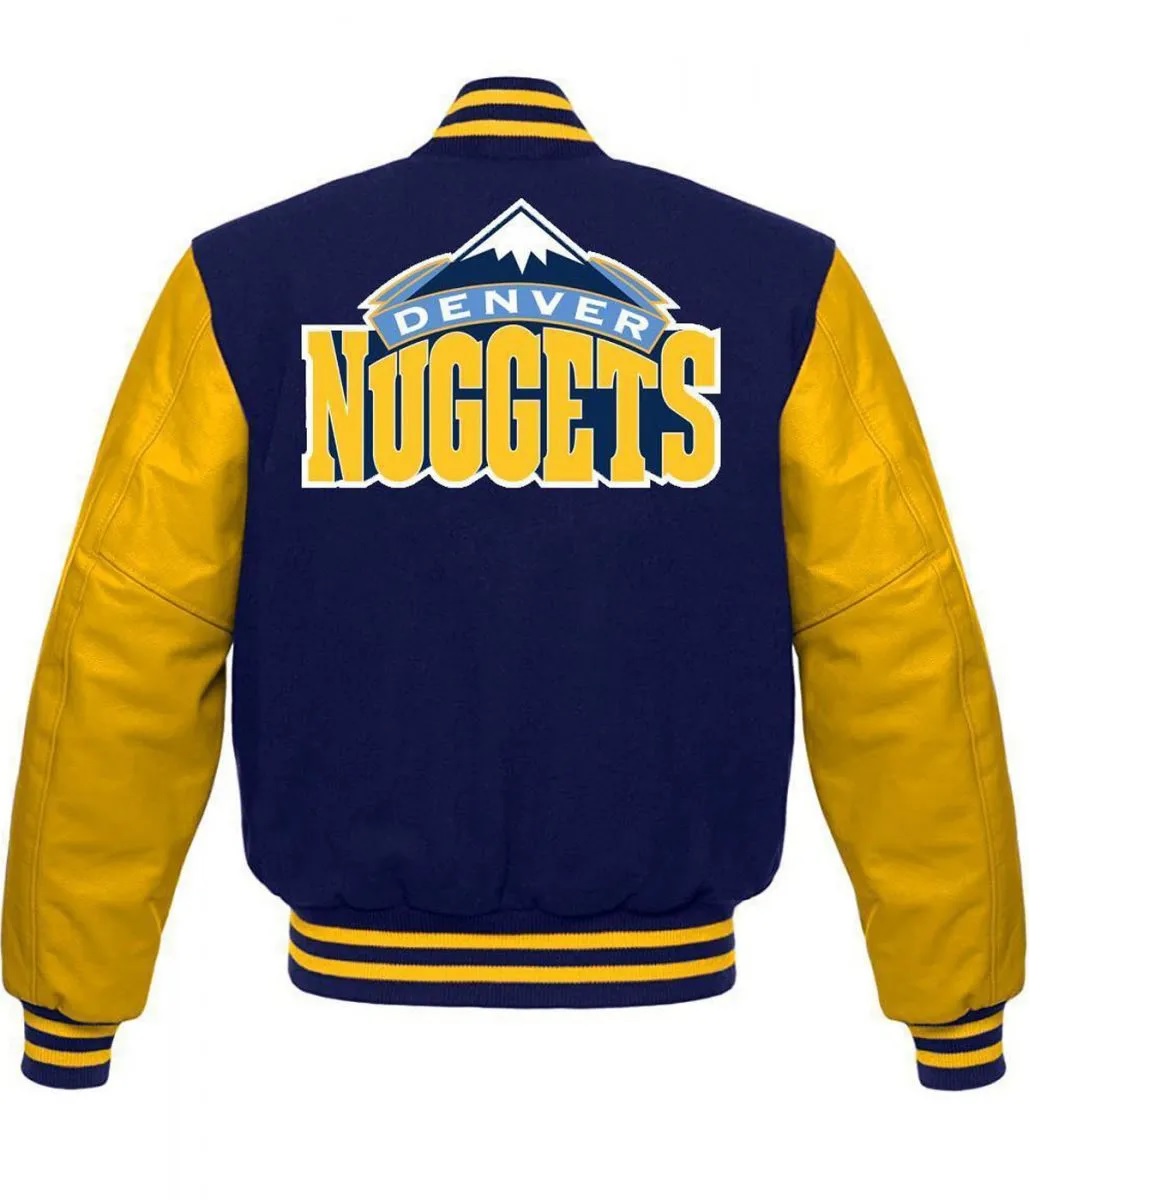 Denver Nuggets NBA Blue and Yellow Varsity Jacket